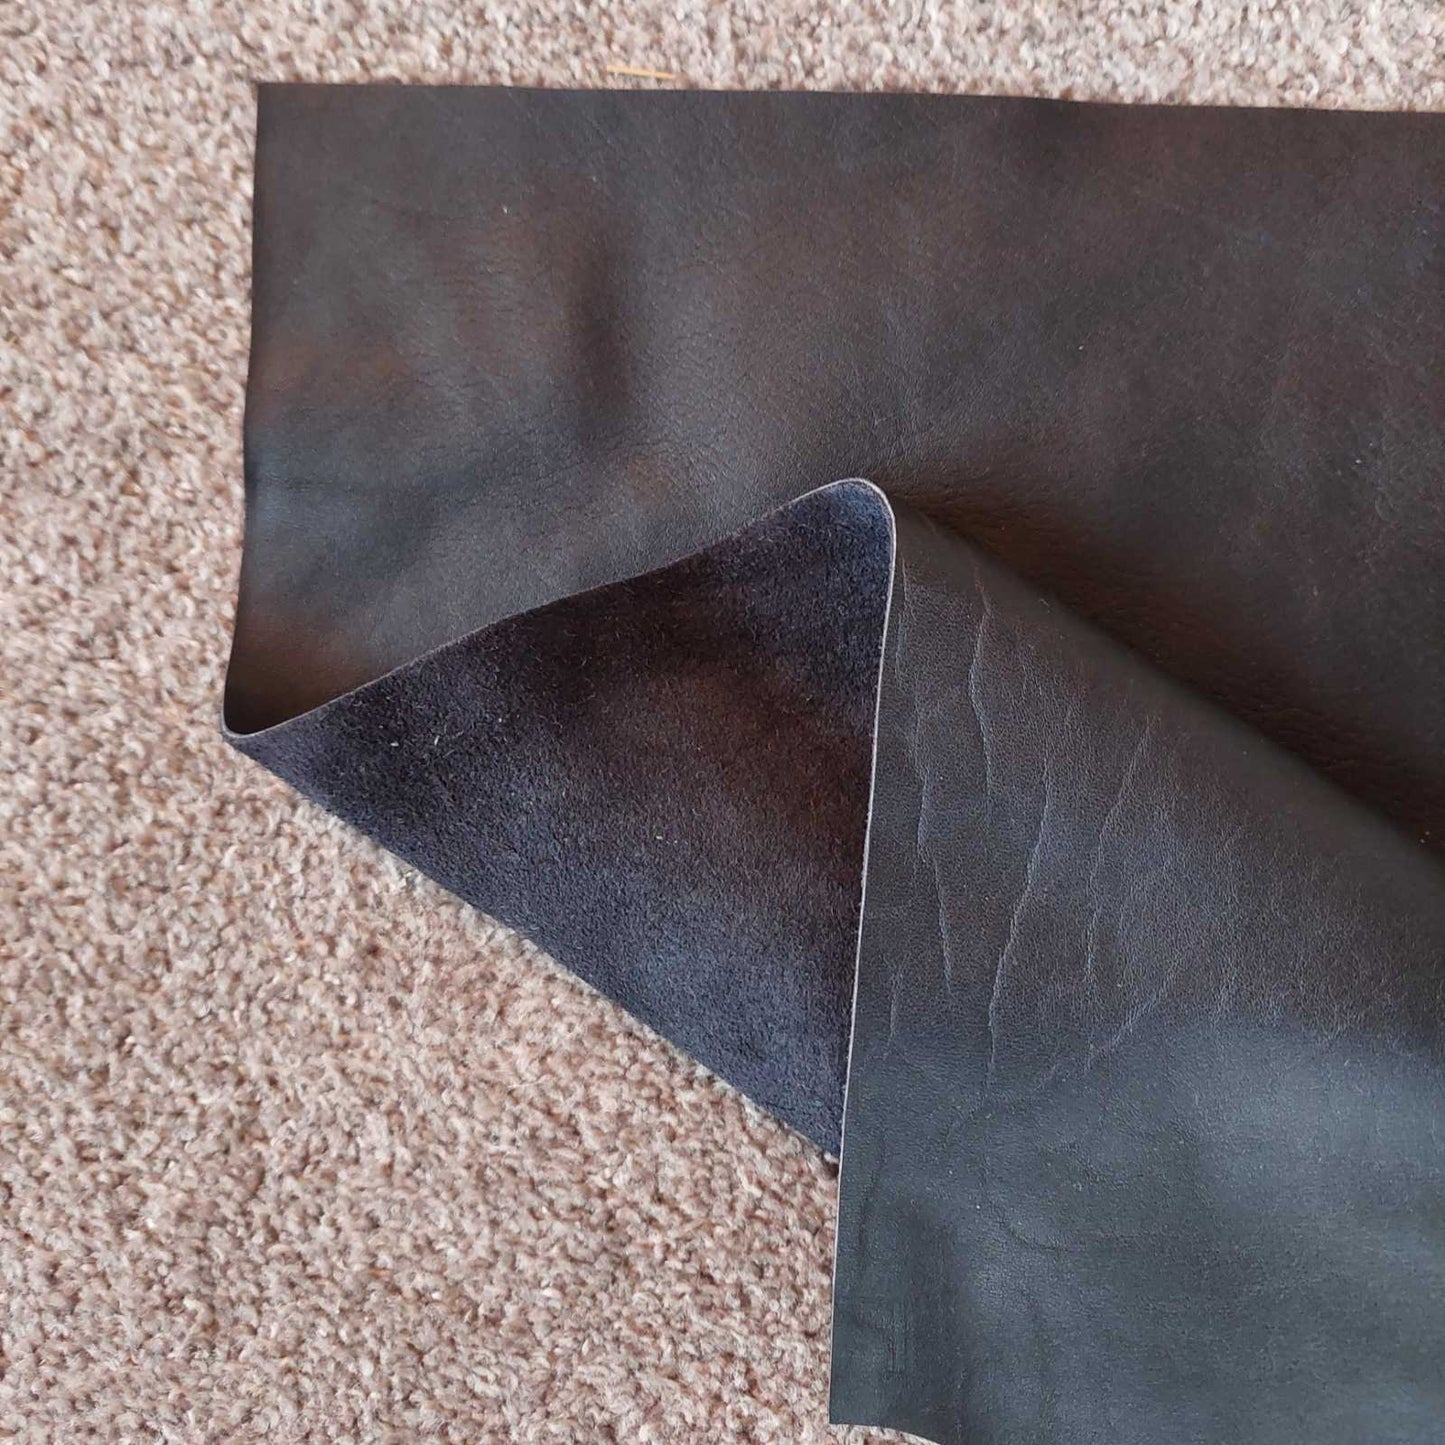 Black Scrap Leather -1.5mm